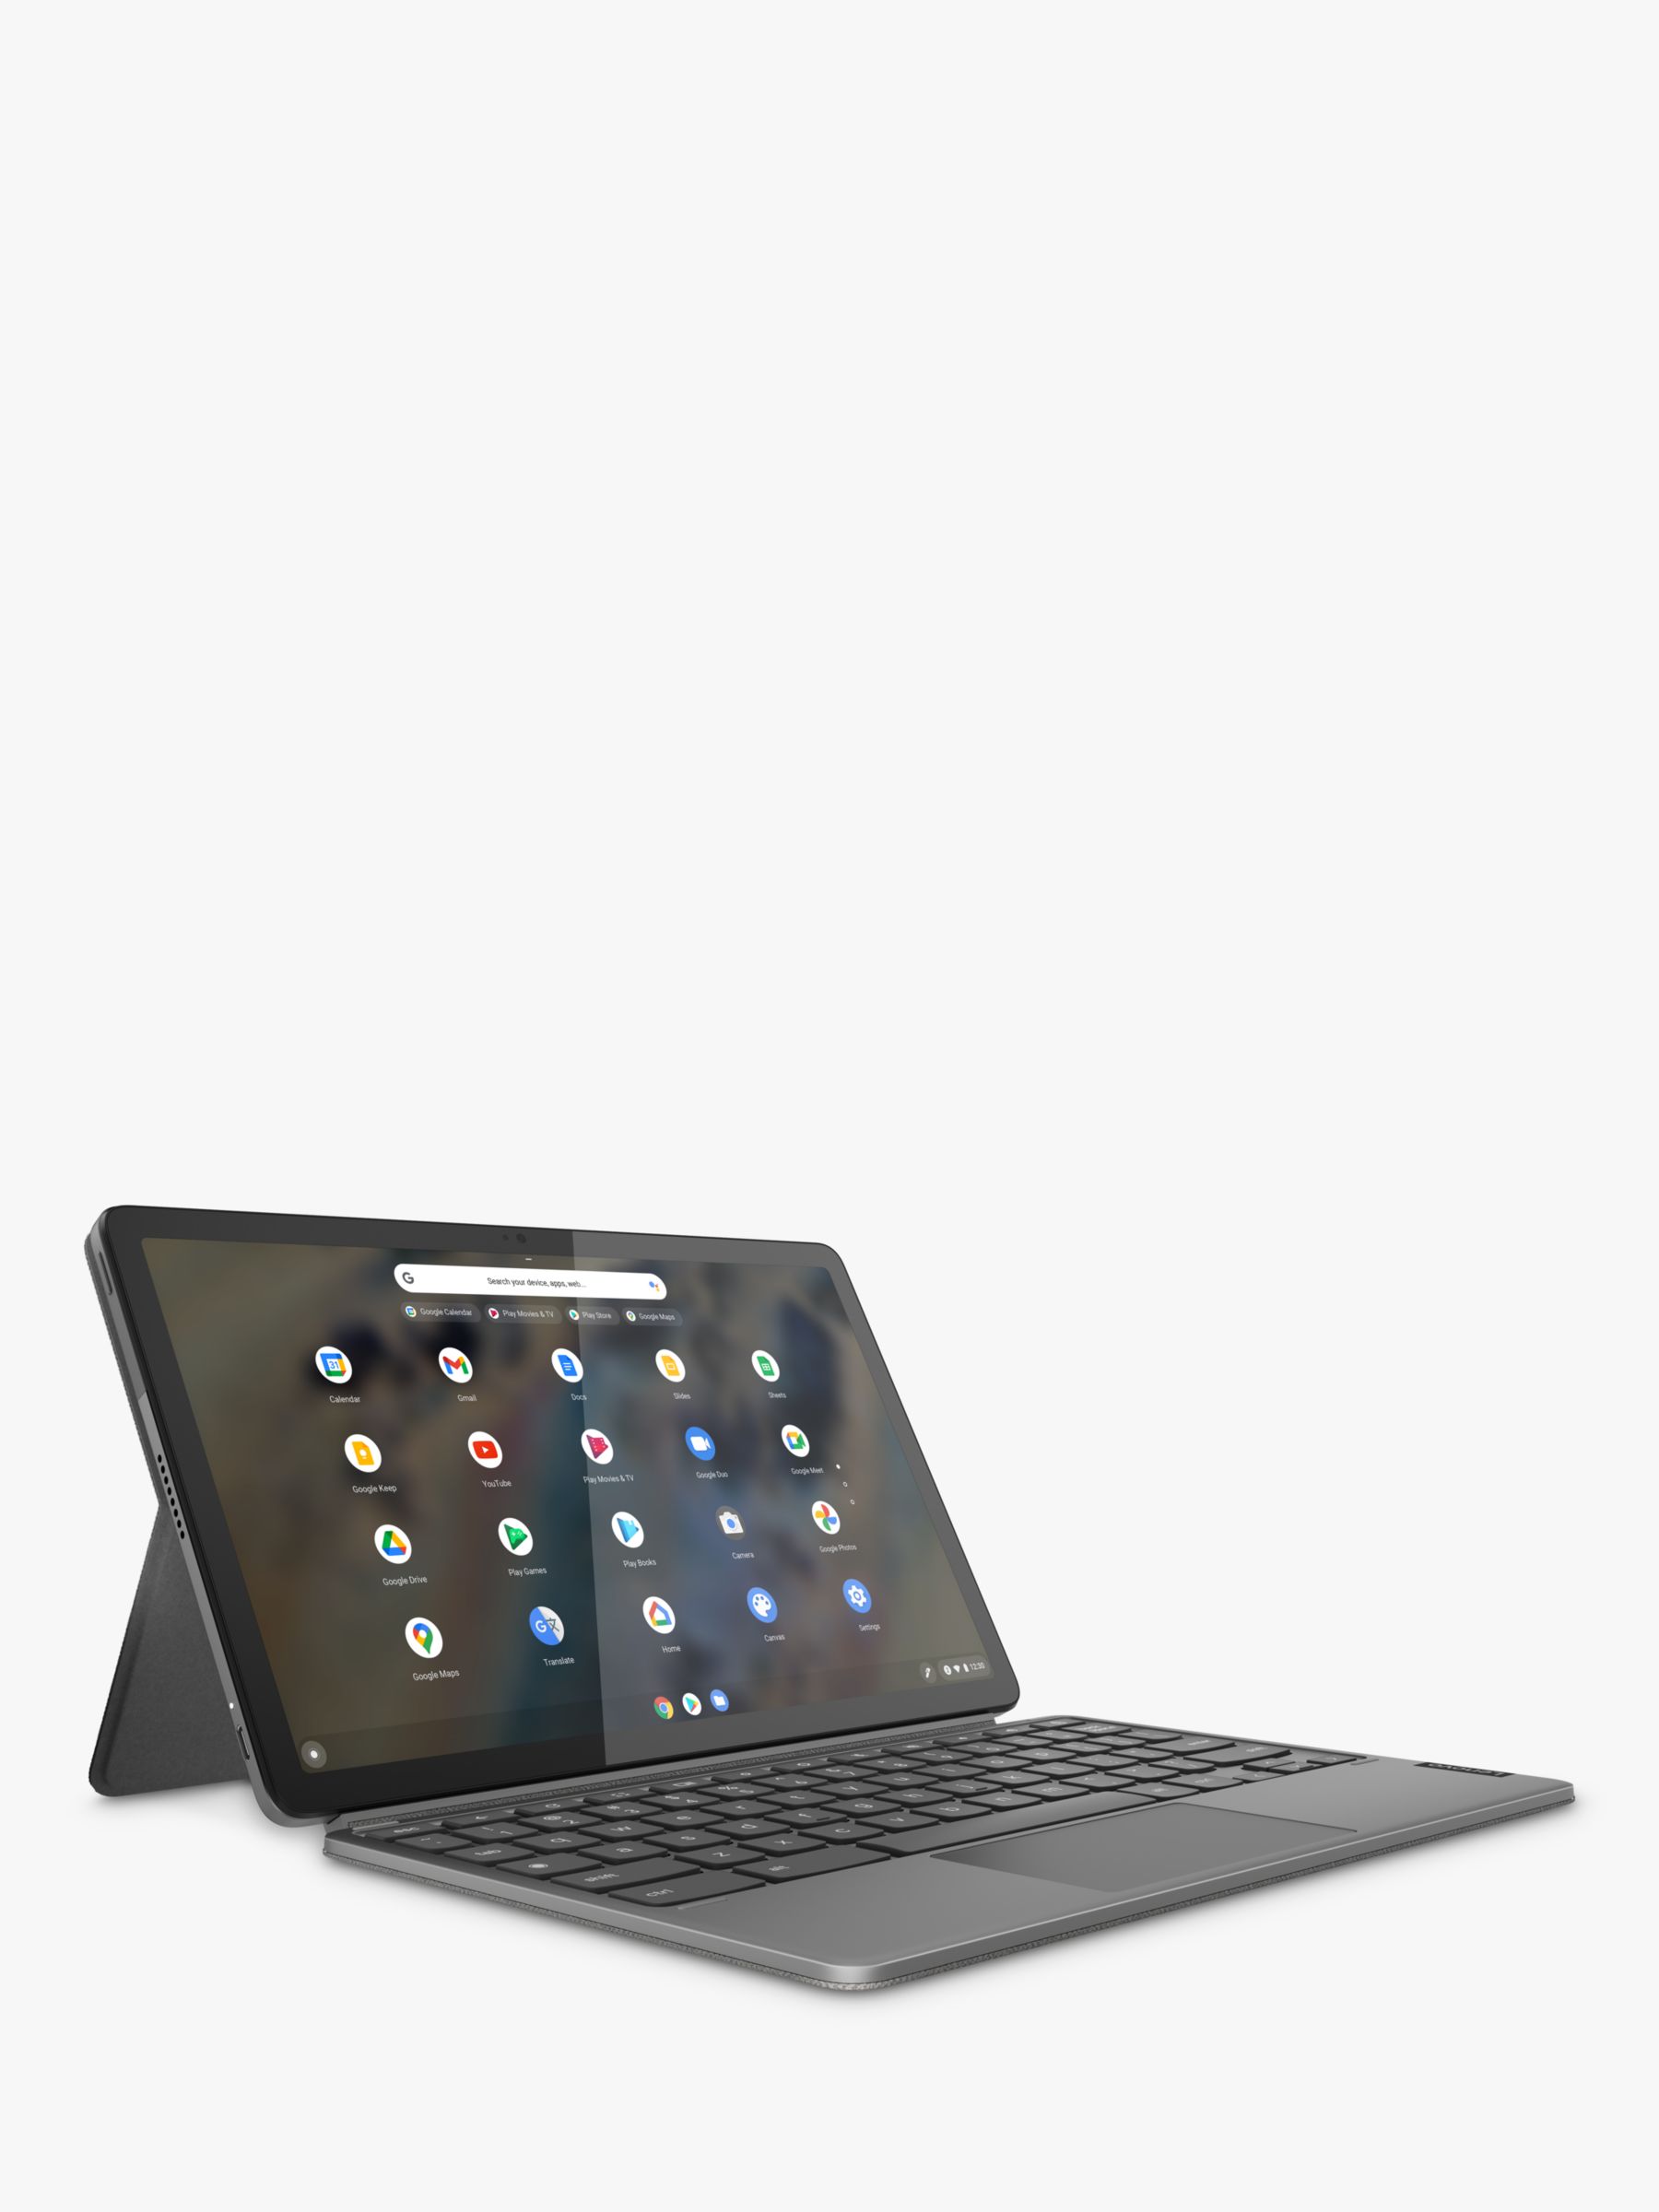 Lenovo IdeaPad Duet 3 Chromebook Laptop, Qualcomm Snapdragon